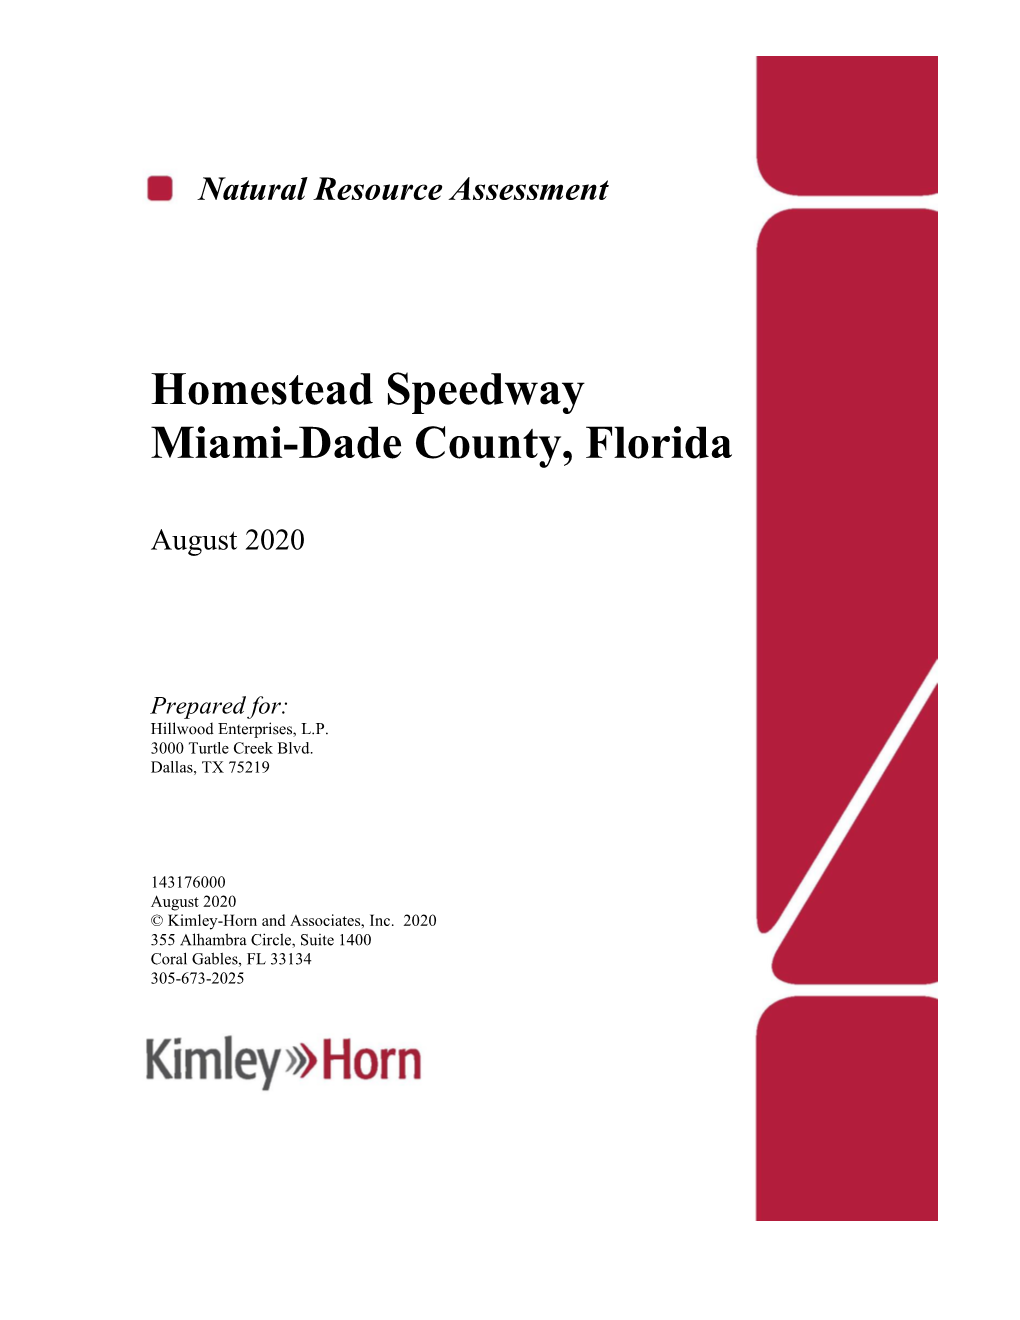 Homestead Speedway Miami-Dade County, Florida